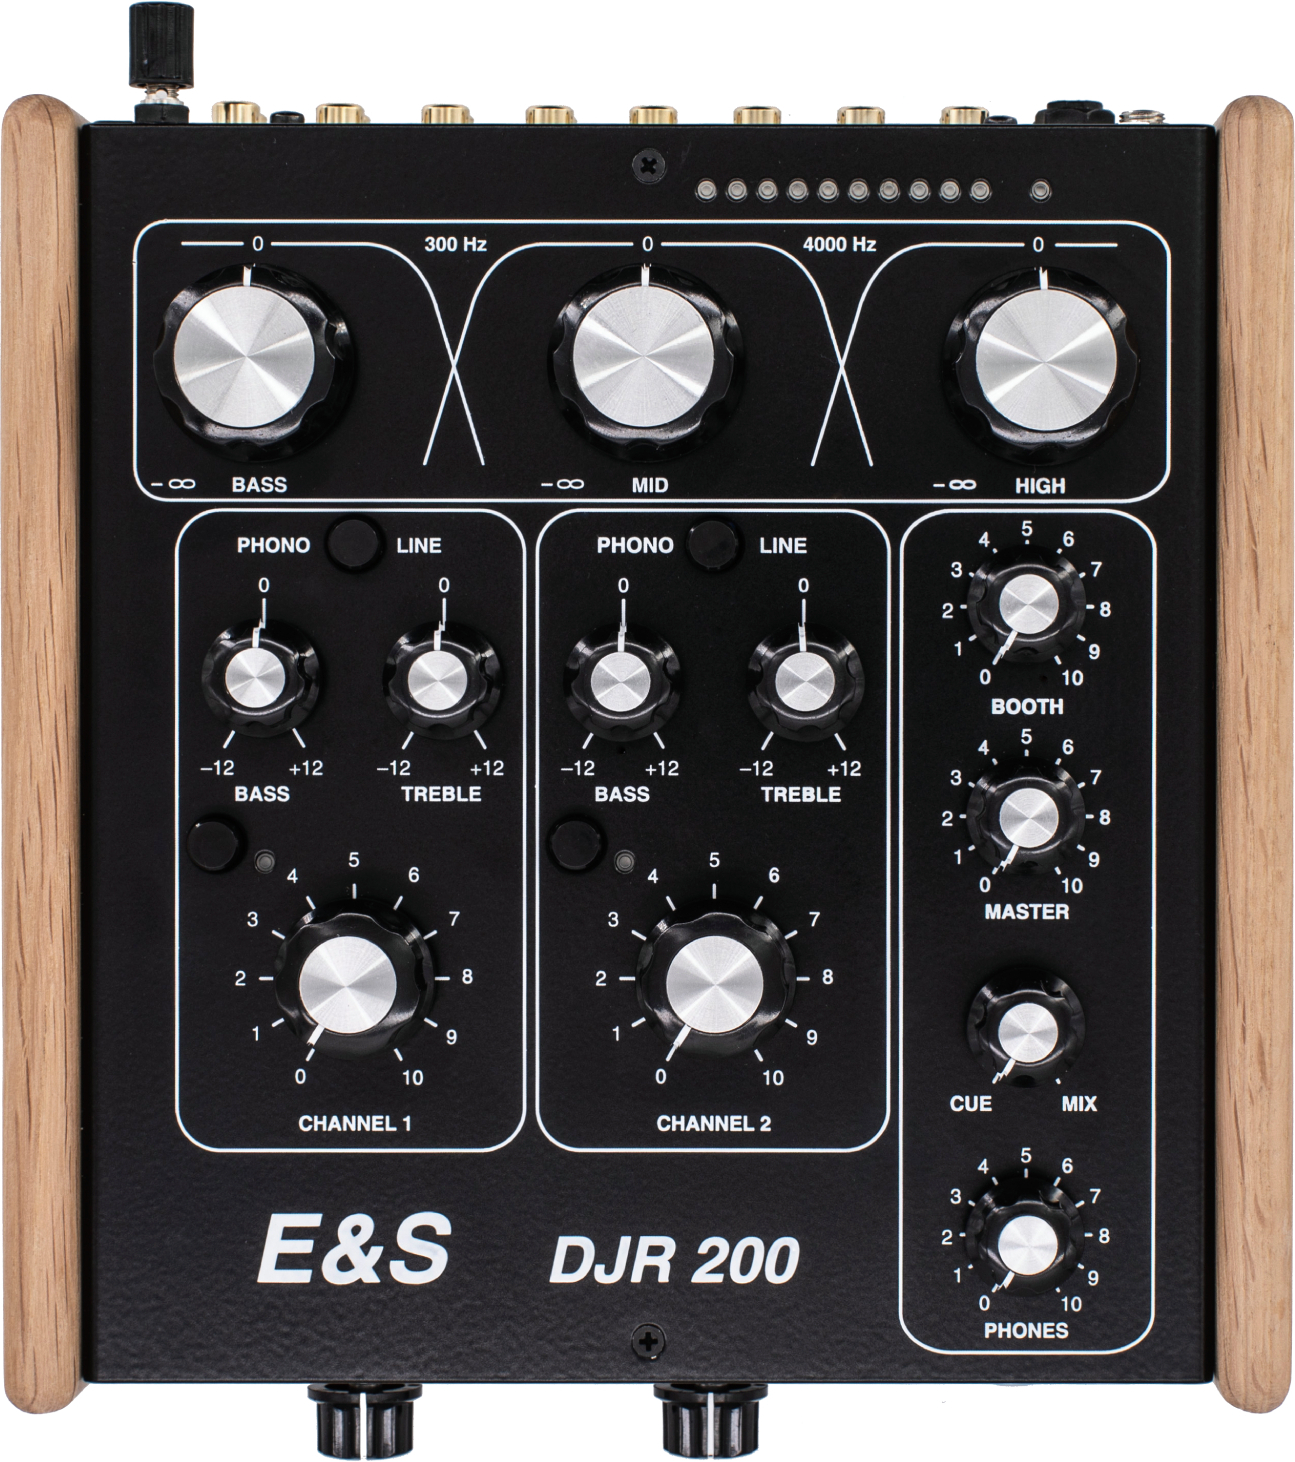 E&s Djr 200 - Mixer DJ - Main picture